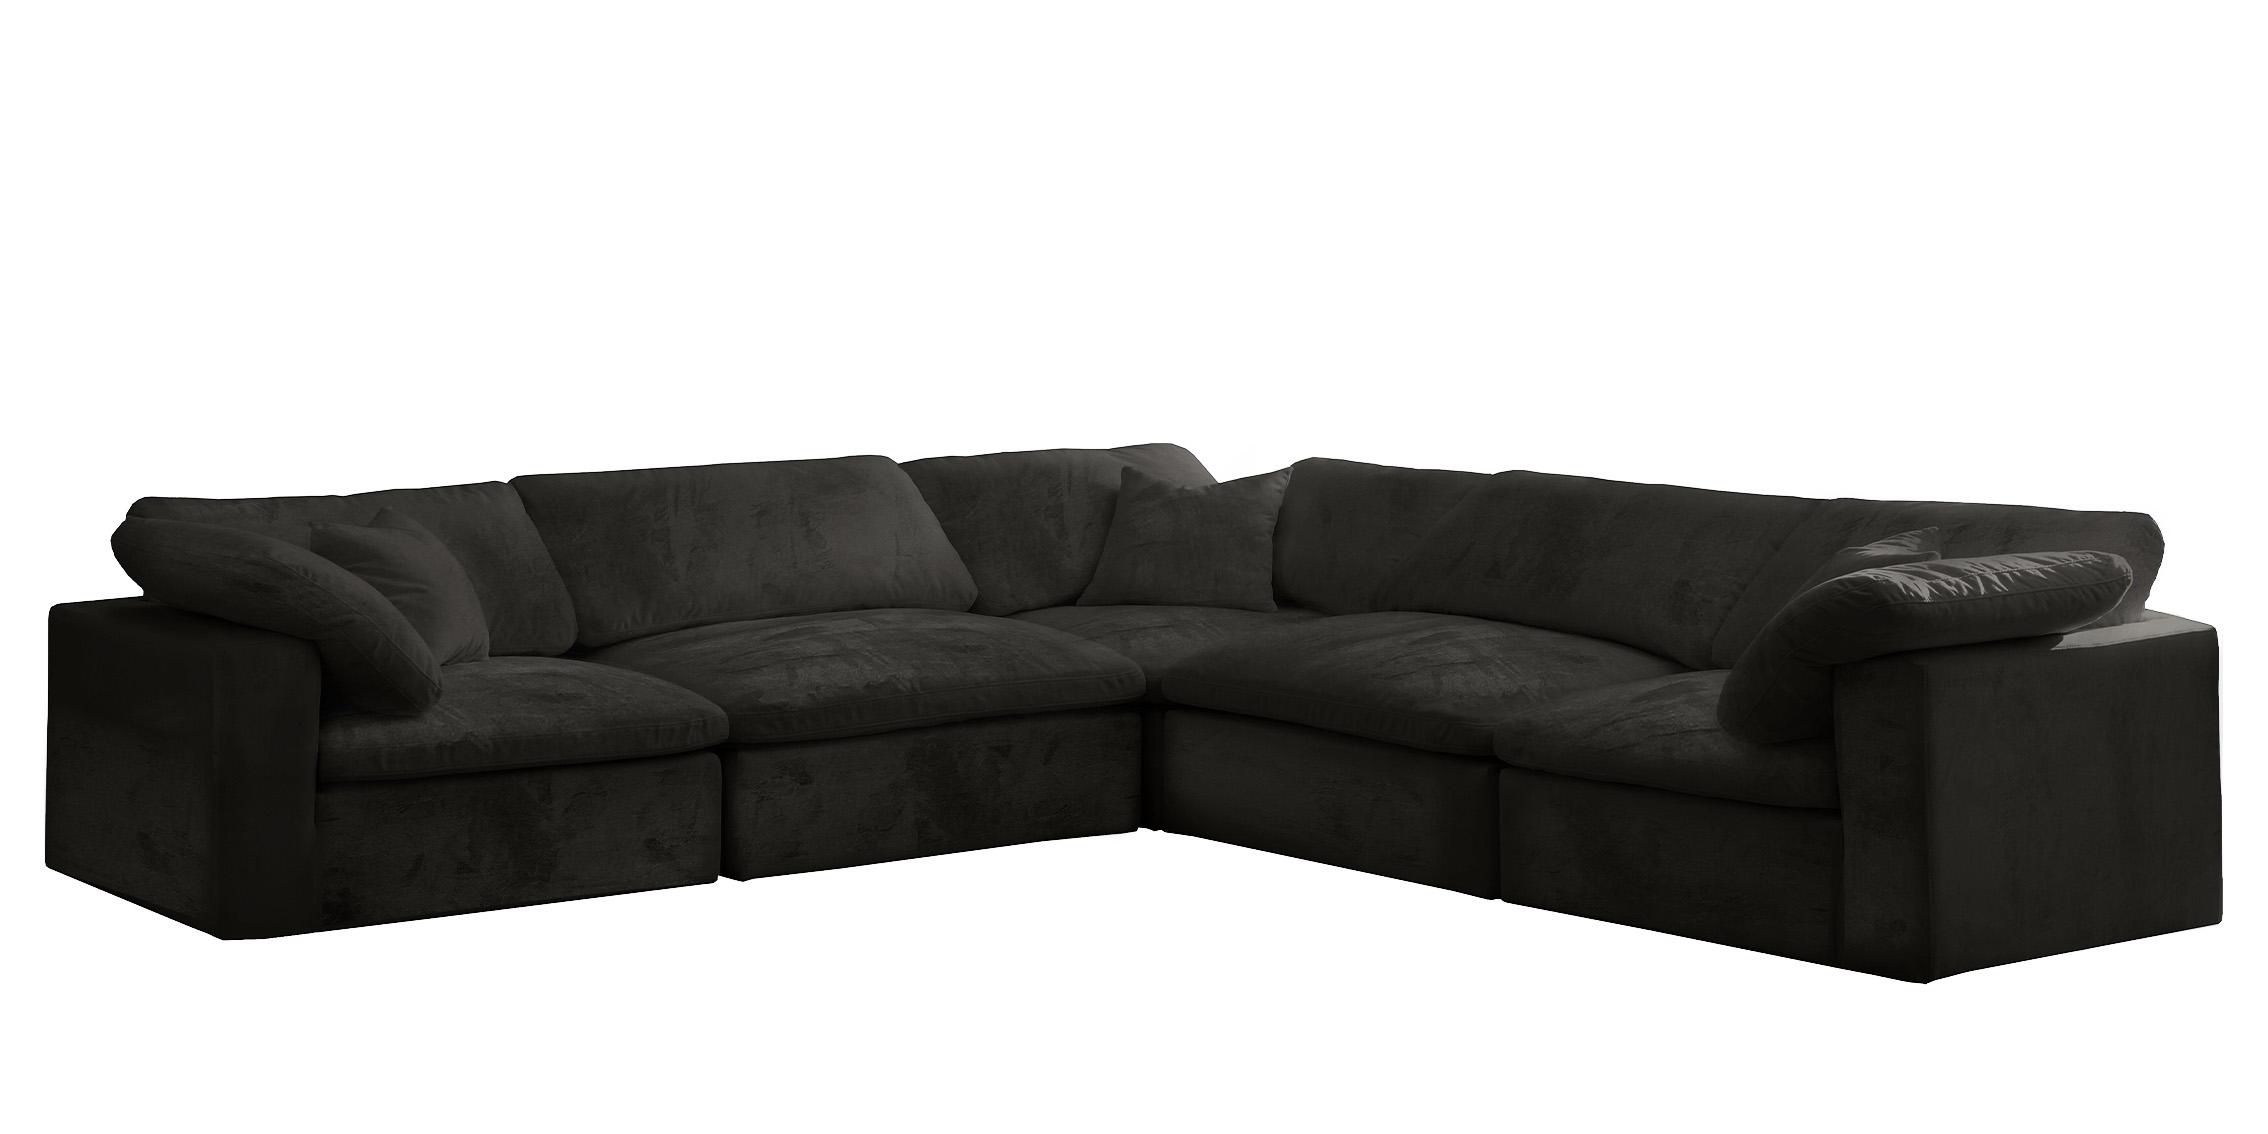 Contemporary, Modern Modular Sectional Sofa 634Black-Sec5C 634Black-Sec5C in Black Fabric